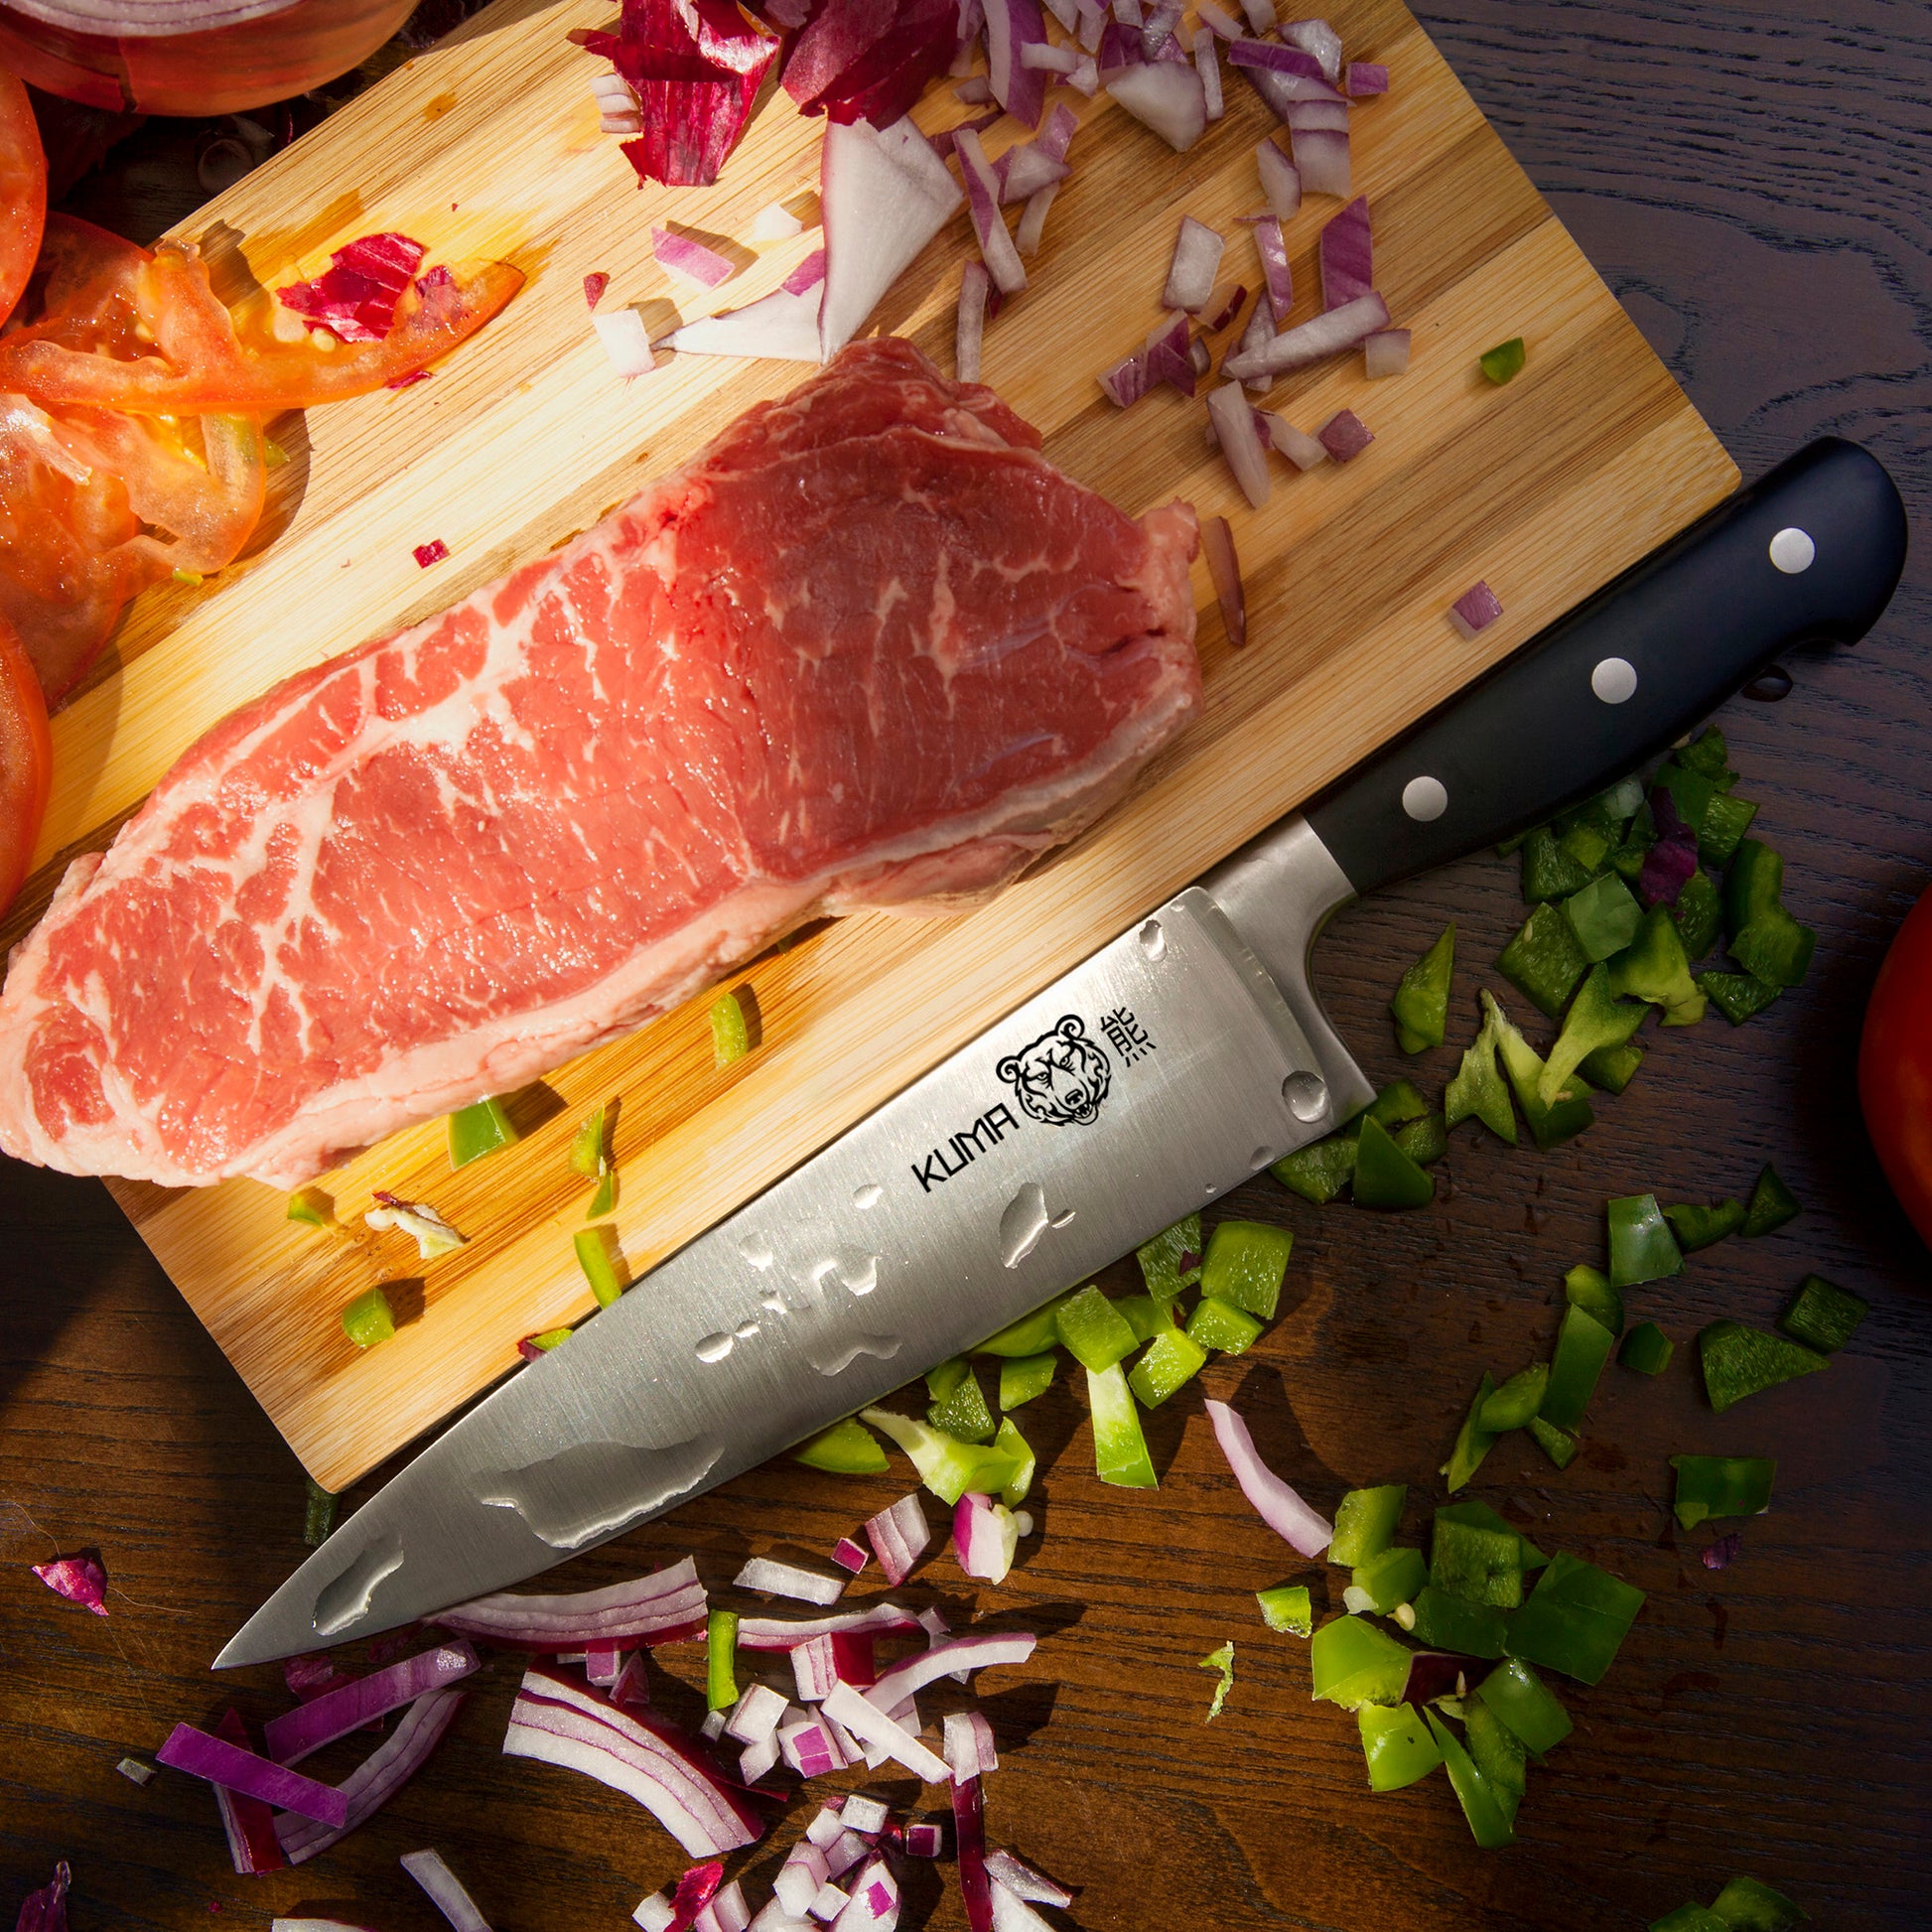 Knifesharks Chef Knife 8 inch - Japanese Super Steel - Razor Sharp